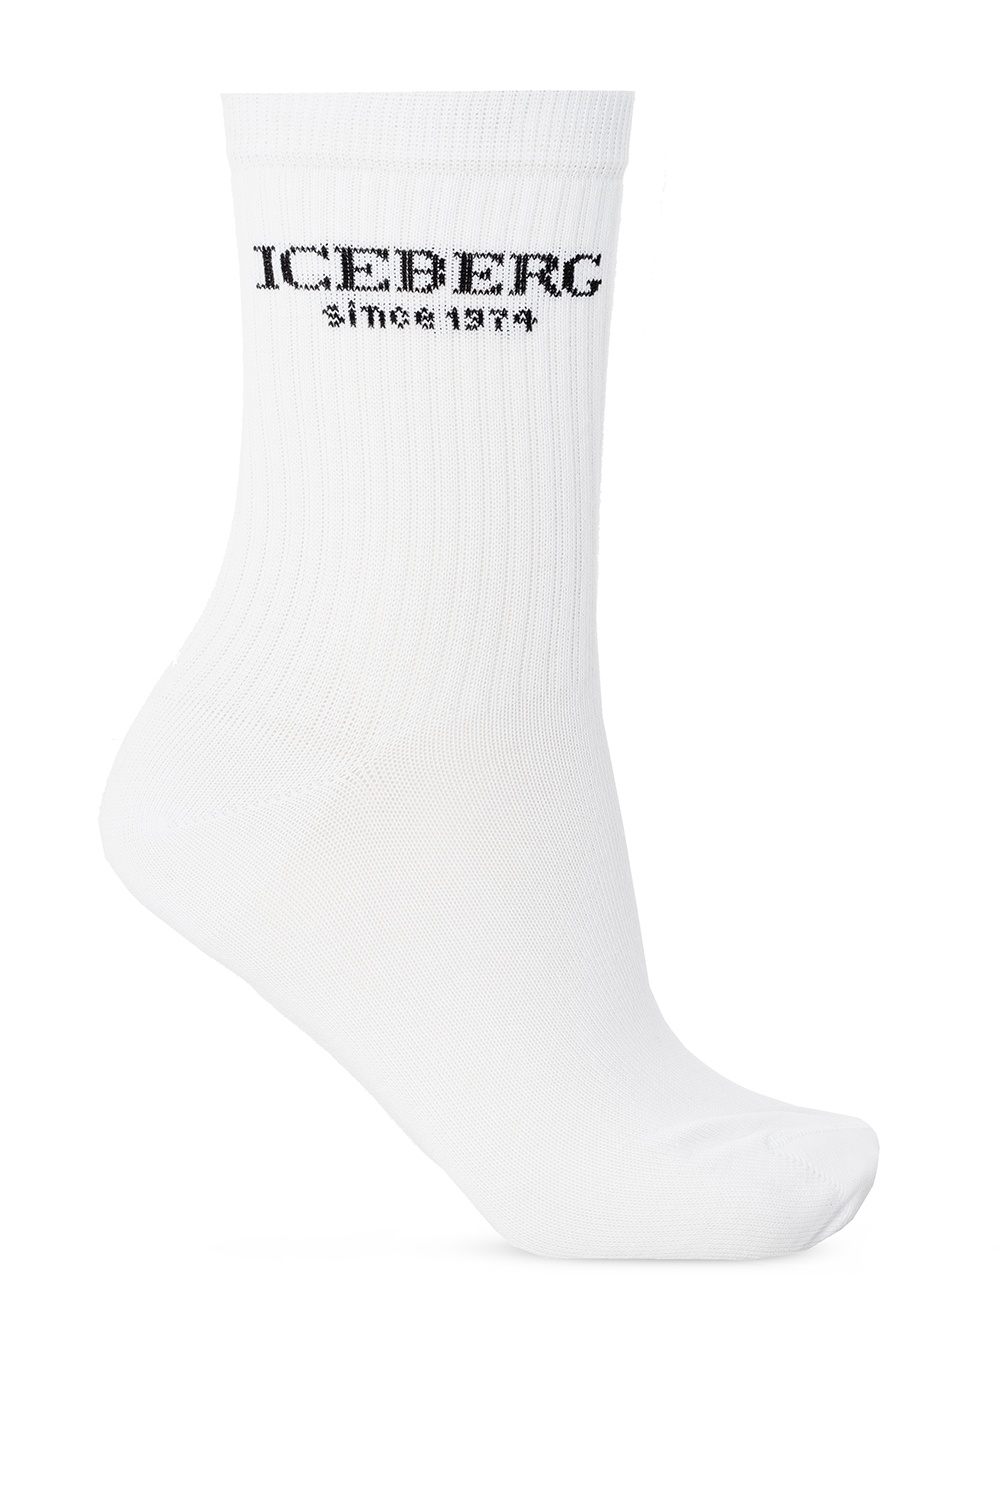 Iceberg Socks with logo